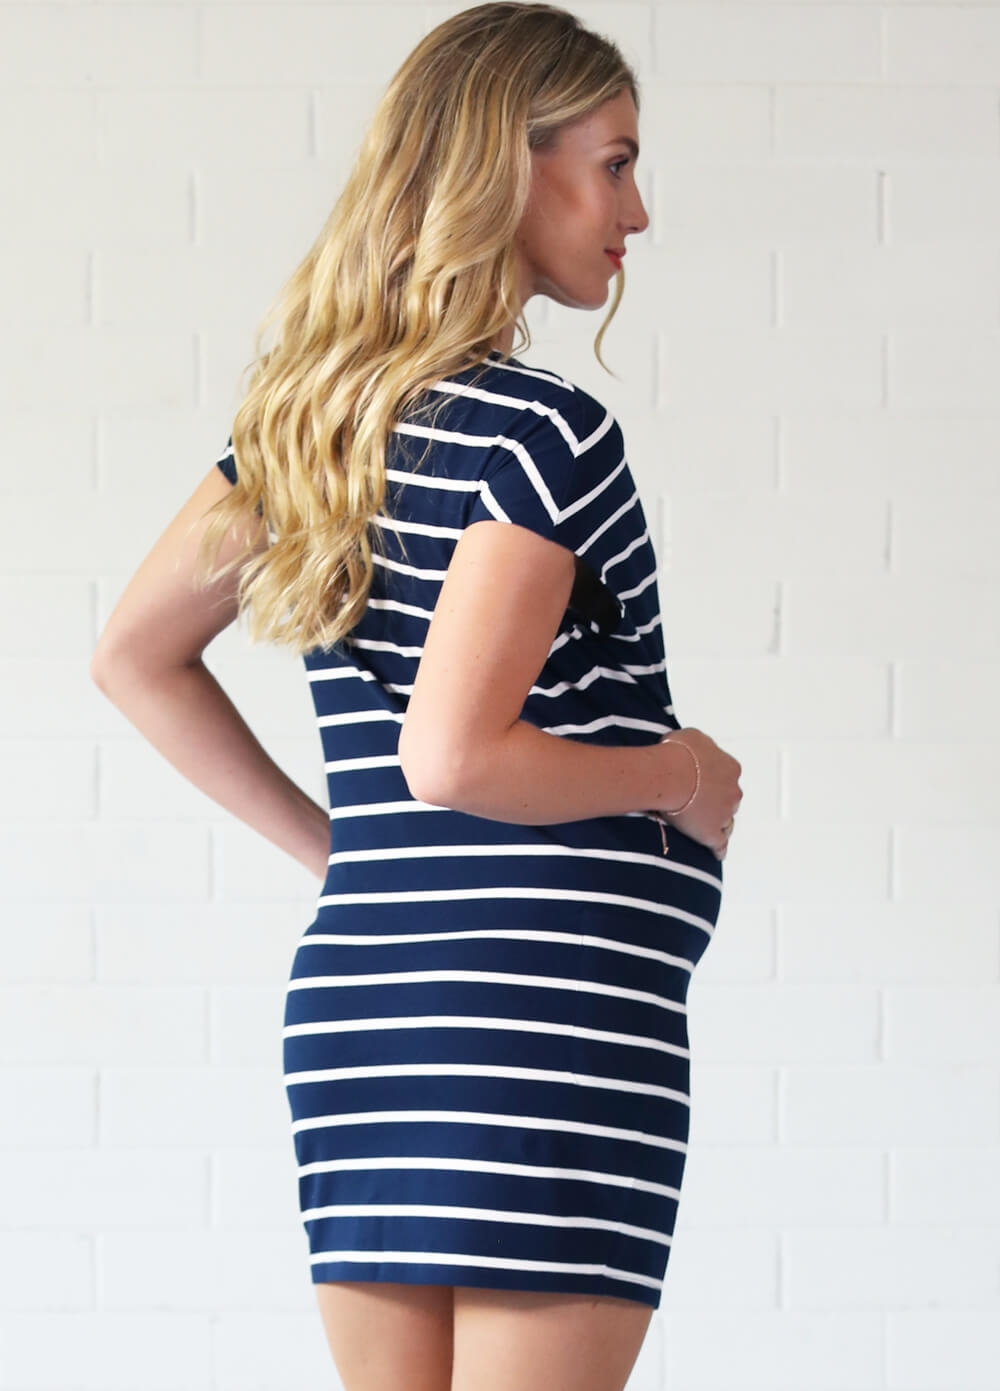 Zara Pocket Maternity Dress in Navy Blue Stripes by Trimester